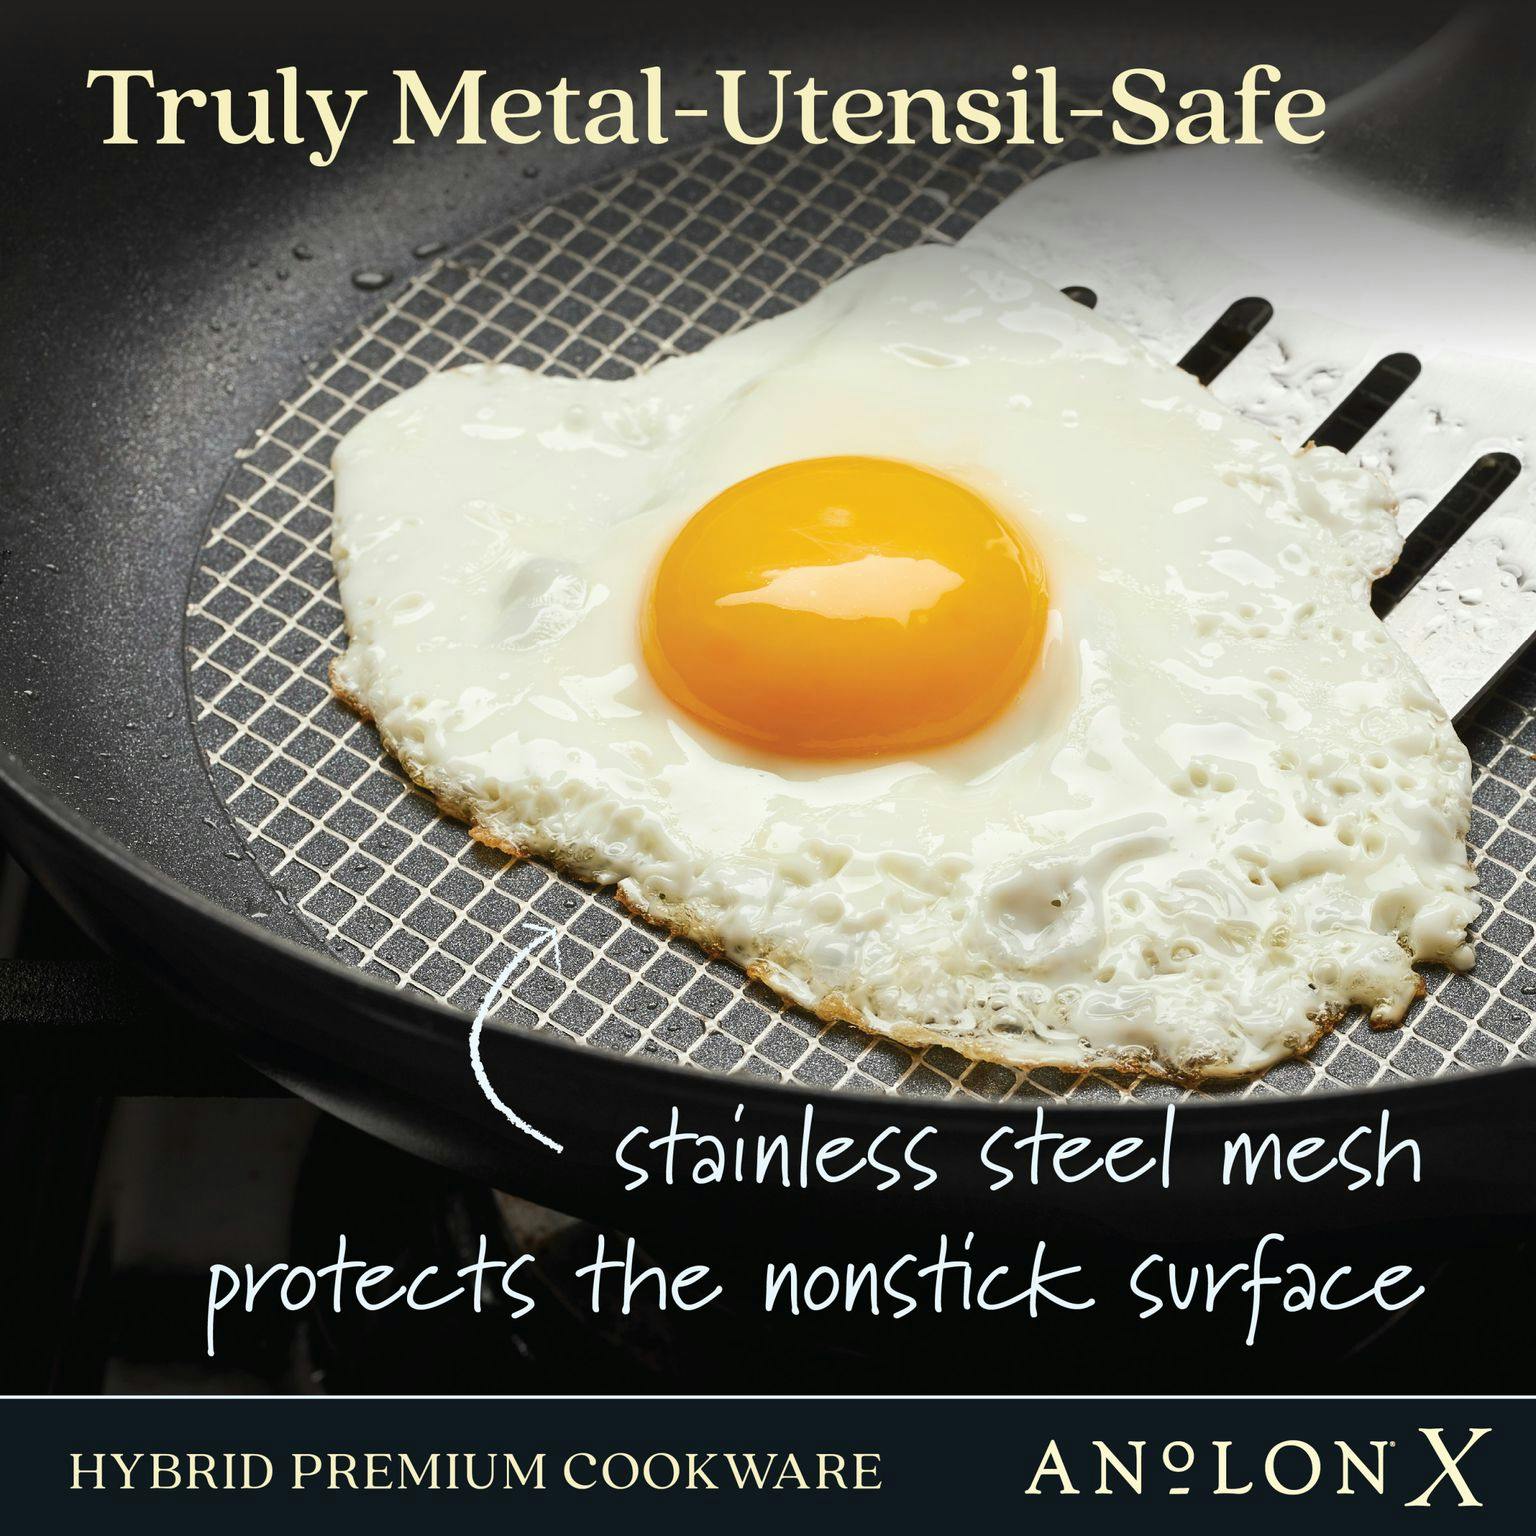 Anolon X Hybrid Nonstick Induction Frying Pan Twin Pack Set, 2-Piece, Super Dark Gray